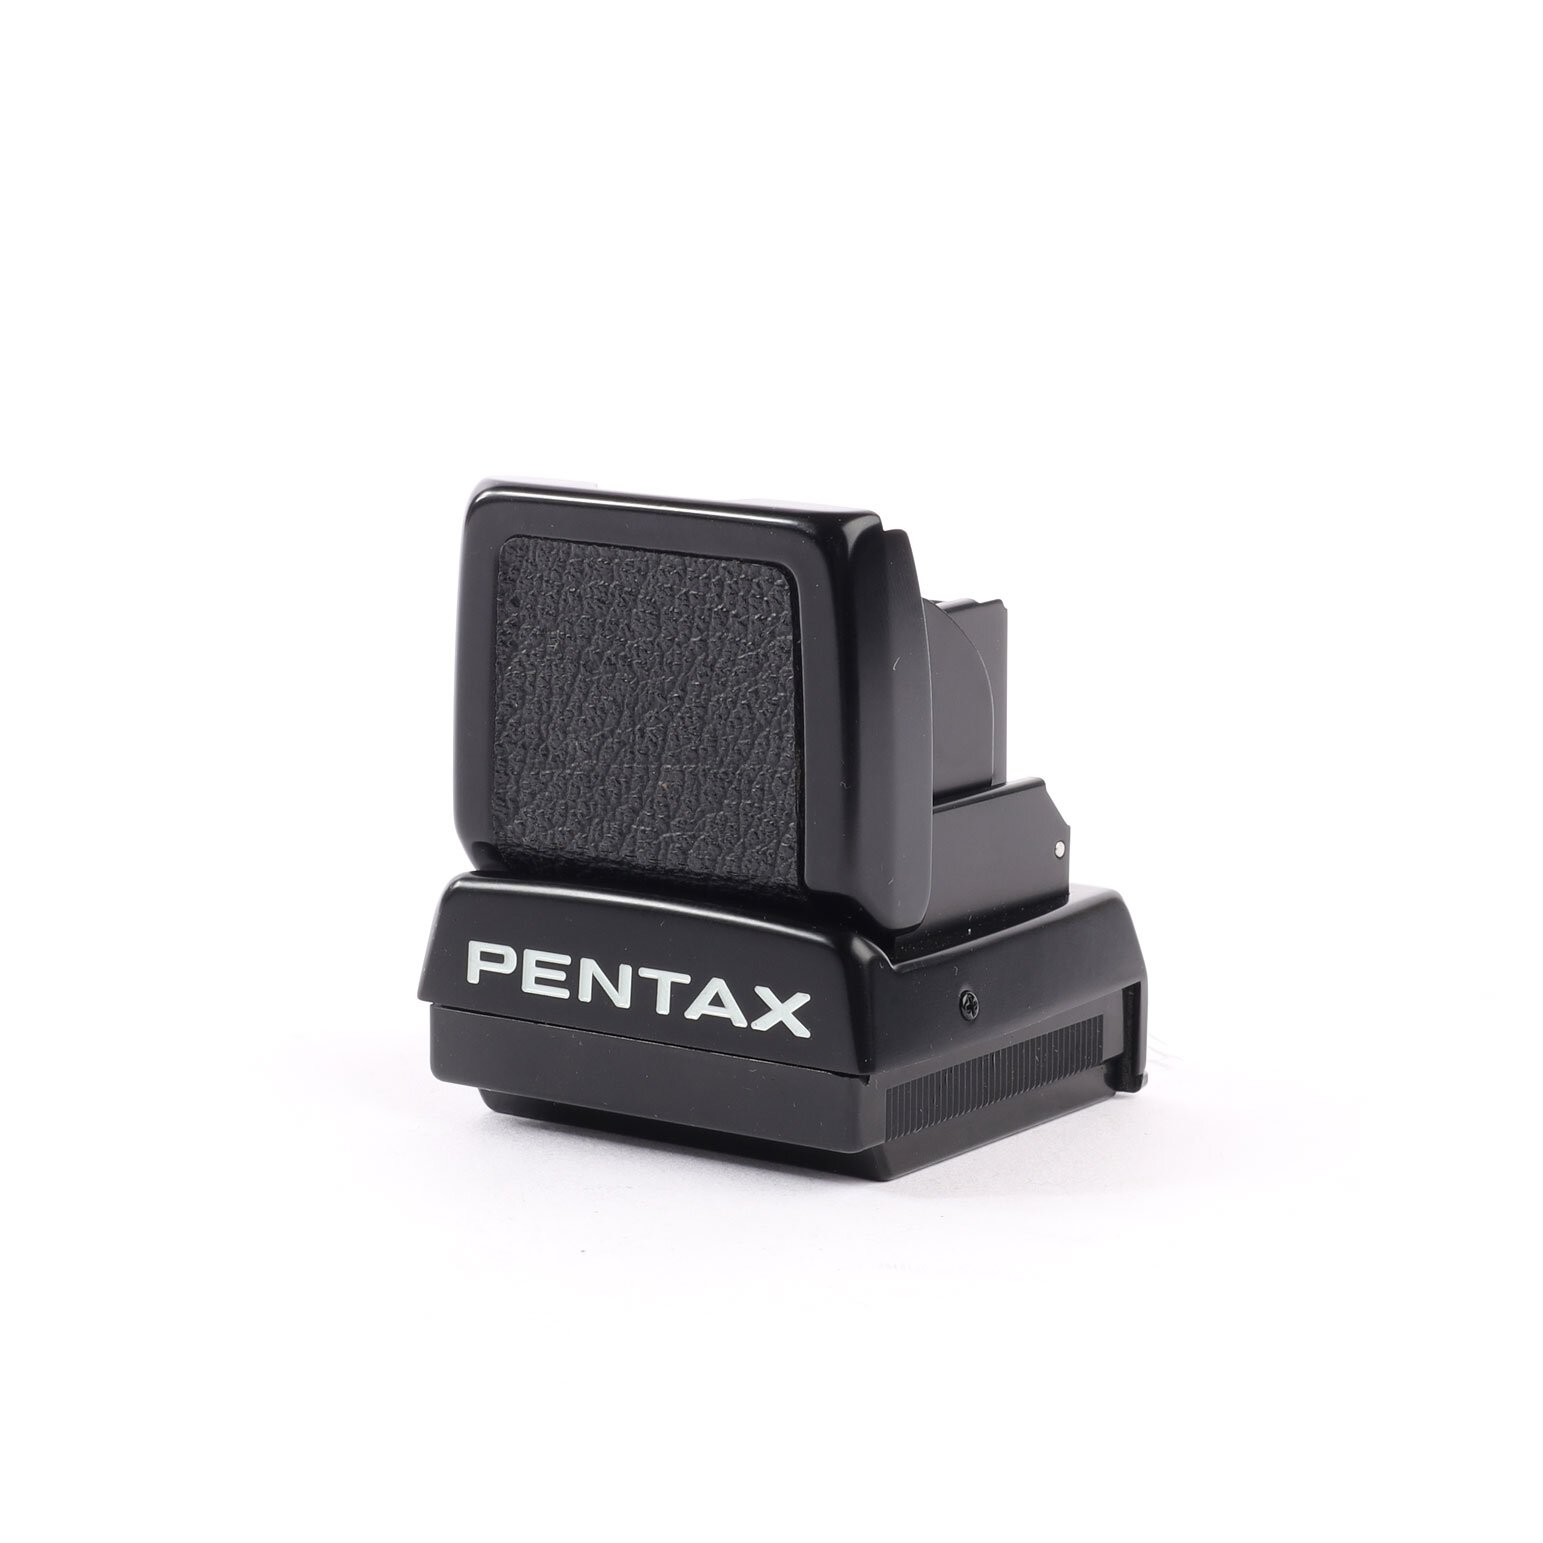 PENTAX Waist-Level Finder FF1 for Pentax LX